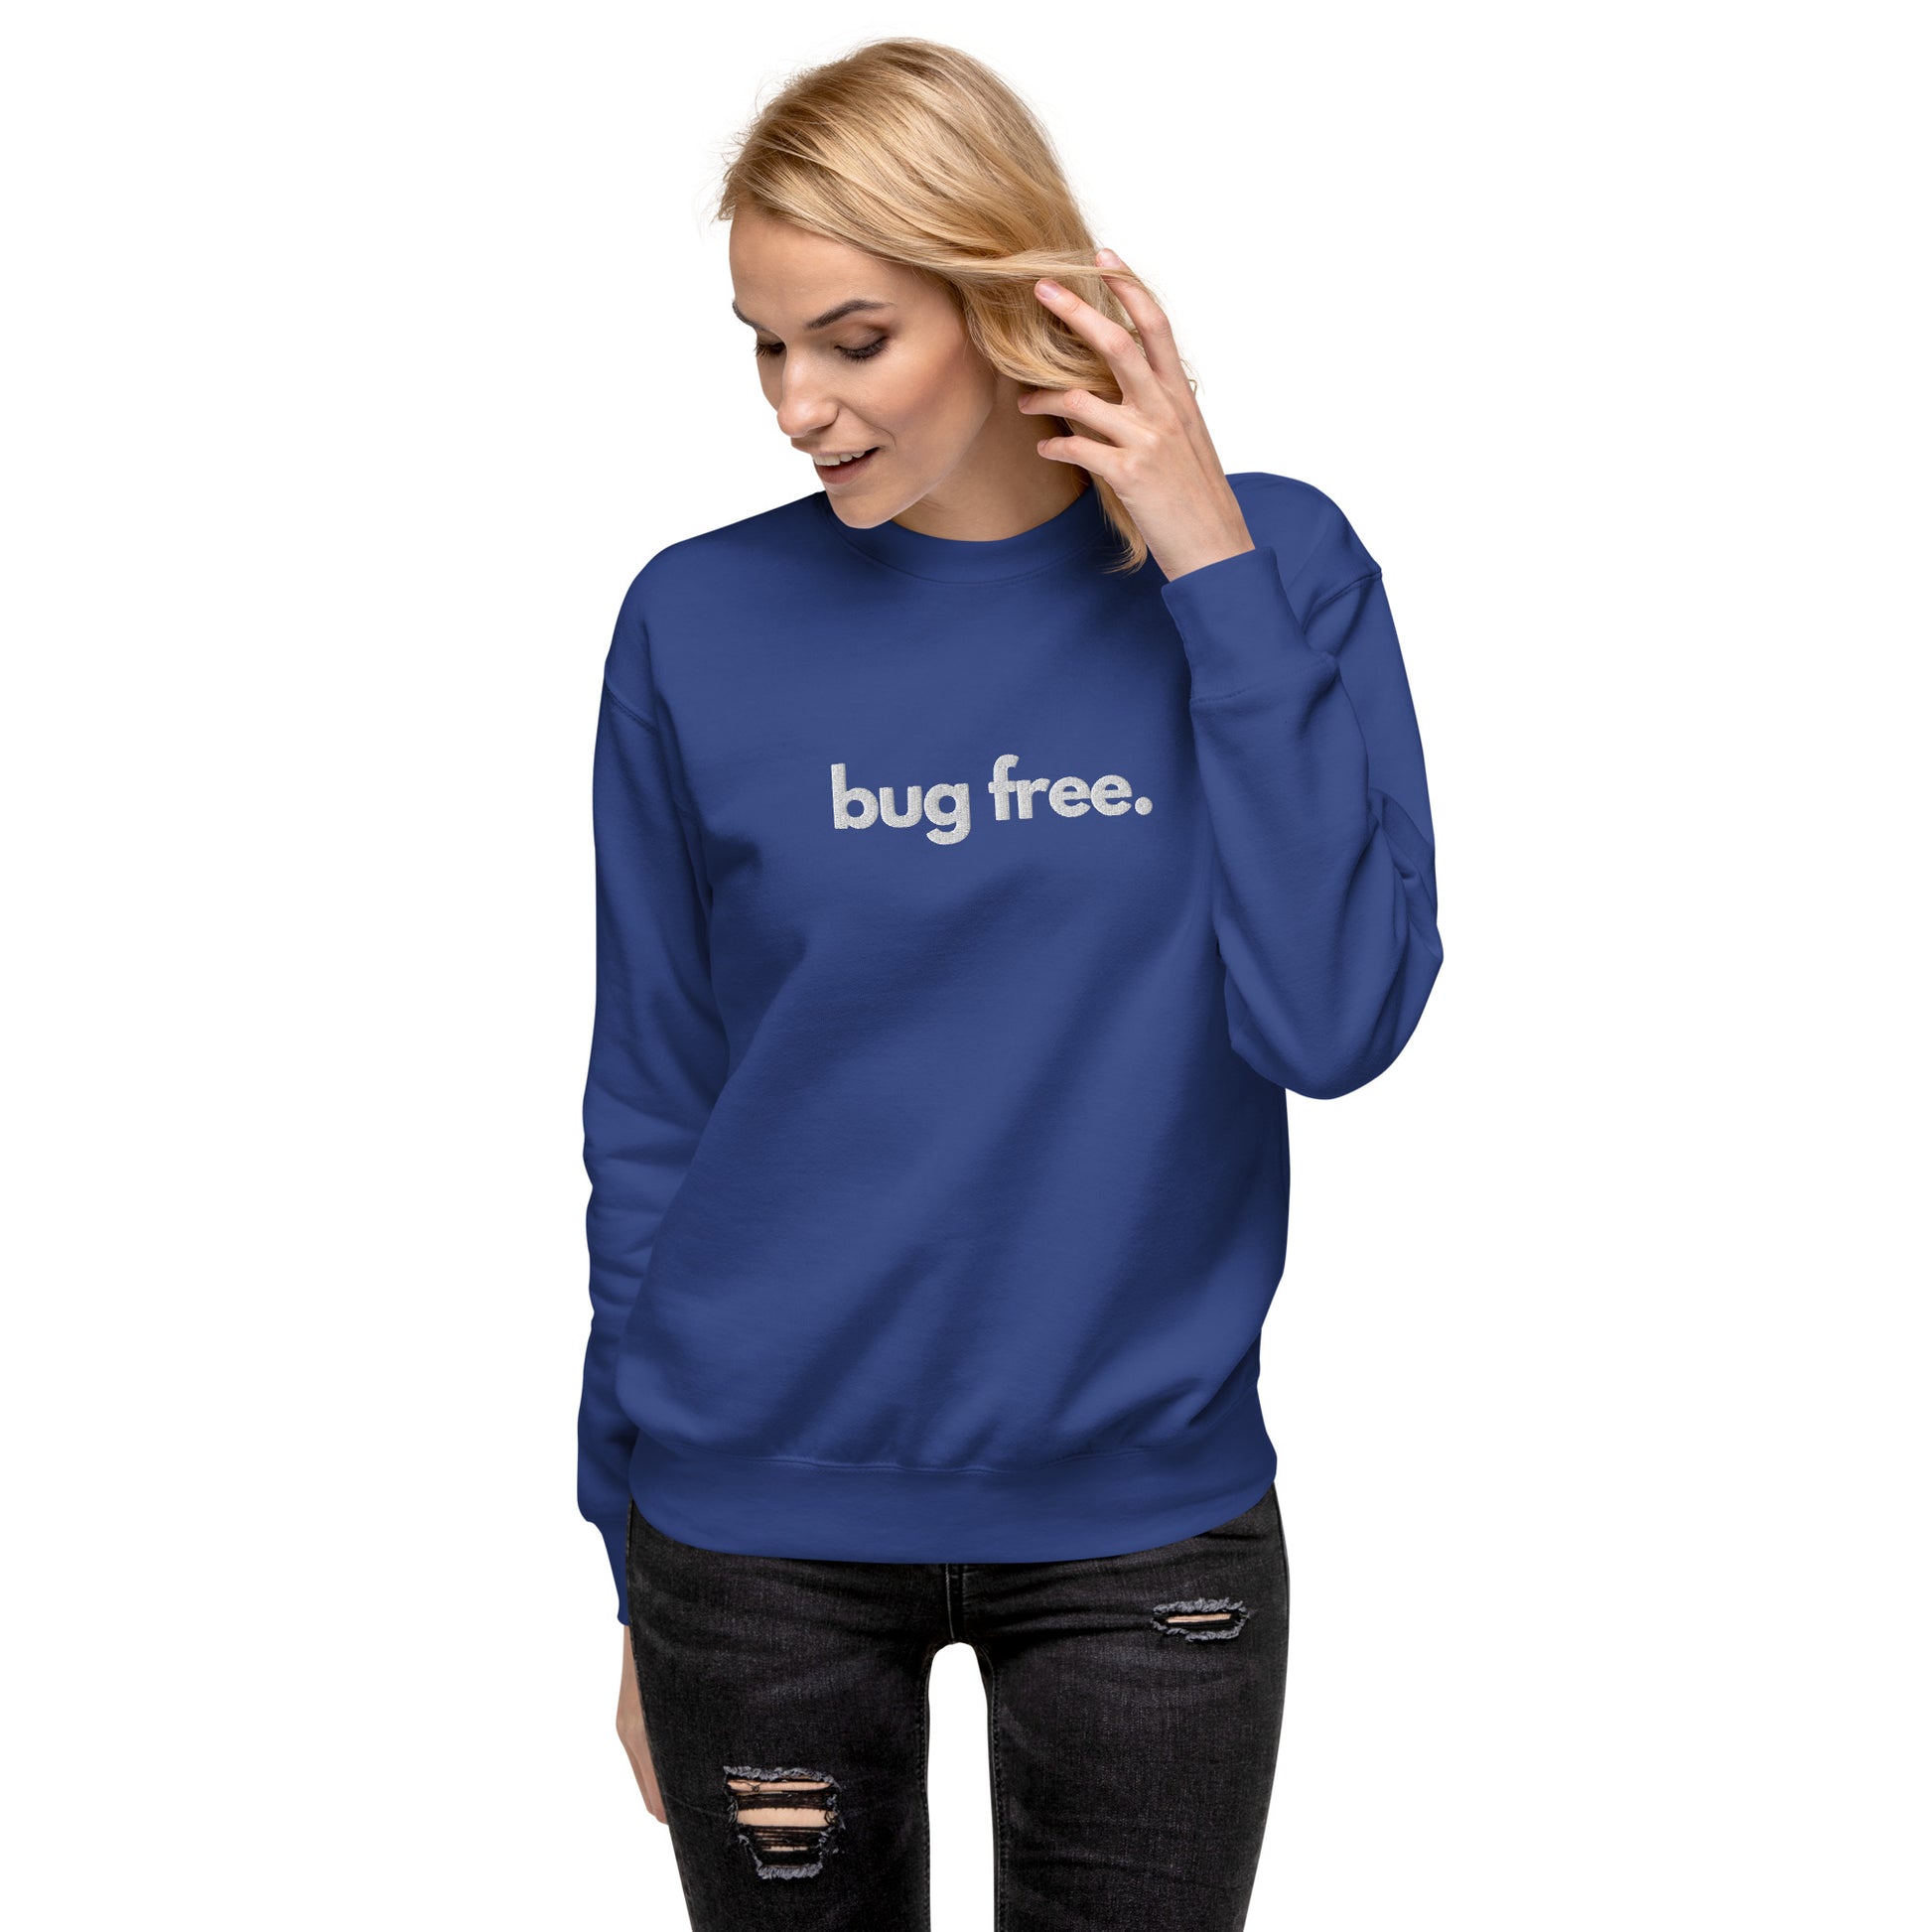 "BUG FREE" Embroidered Unisex Premium Sweatshirt The Developer Shop